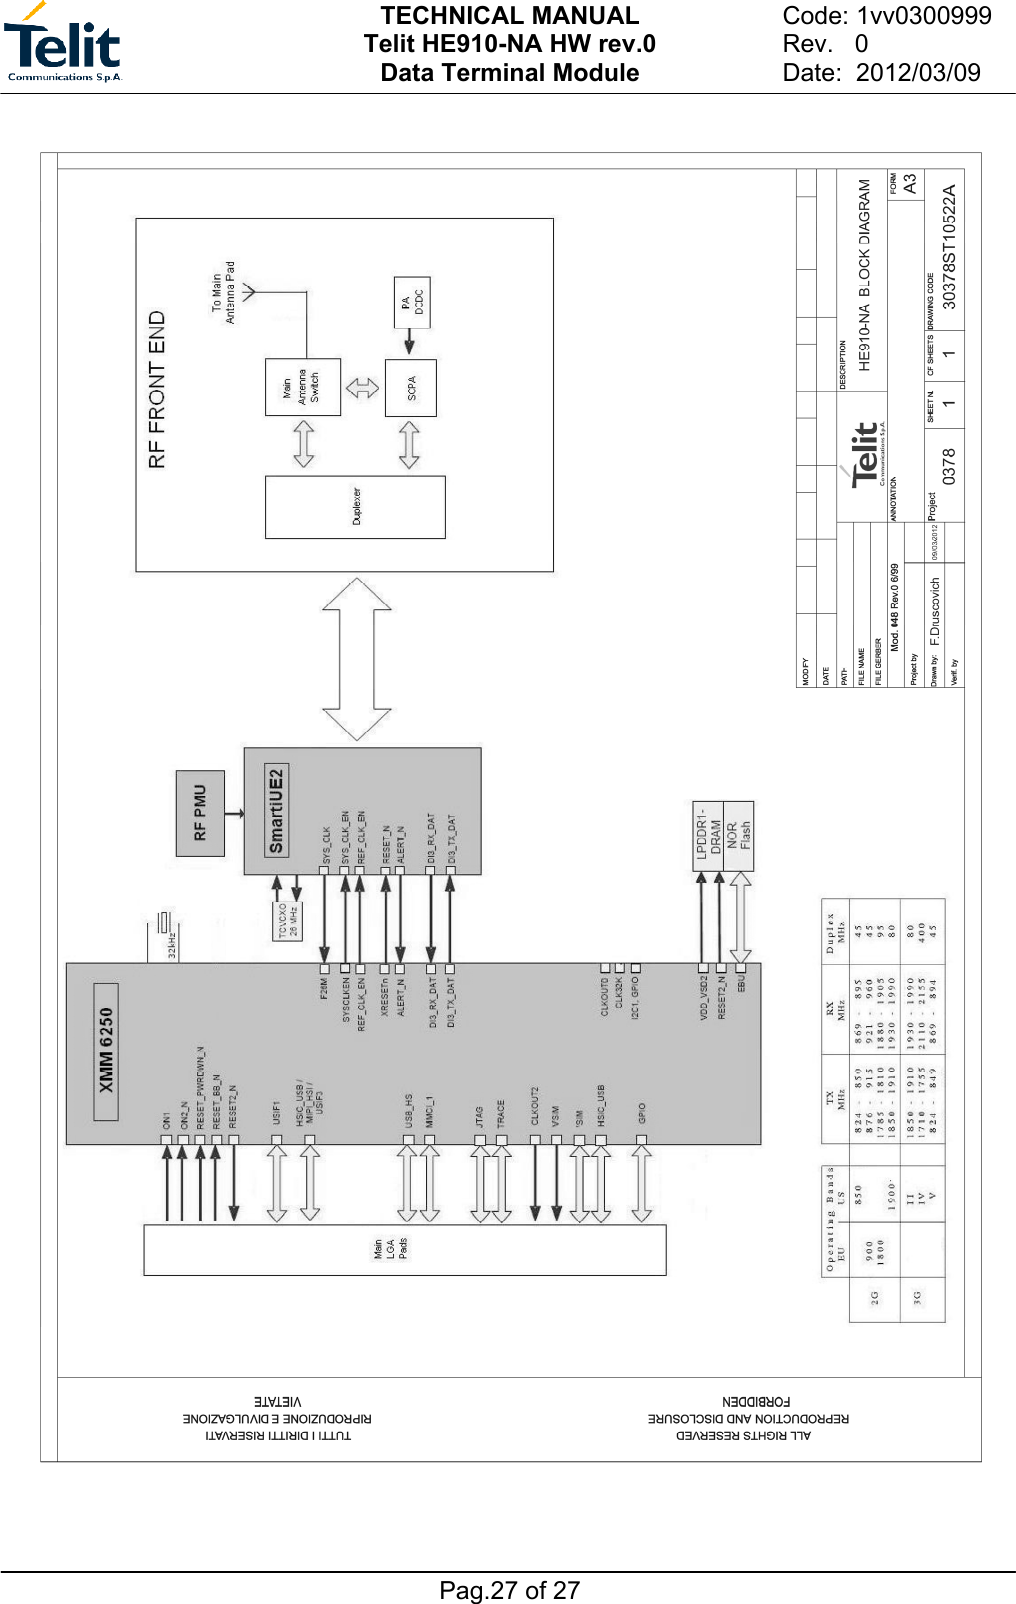 TECHNICAL MANUAL Telit HE910-NA HW rev.0 Data Terminal Module   Pag.27 of 27 Code: 1vv0300999    Rev.   0  Date:  2012/03/09   